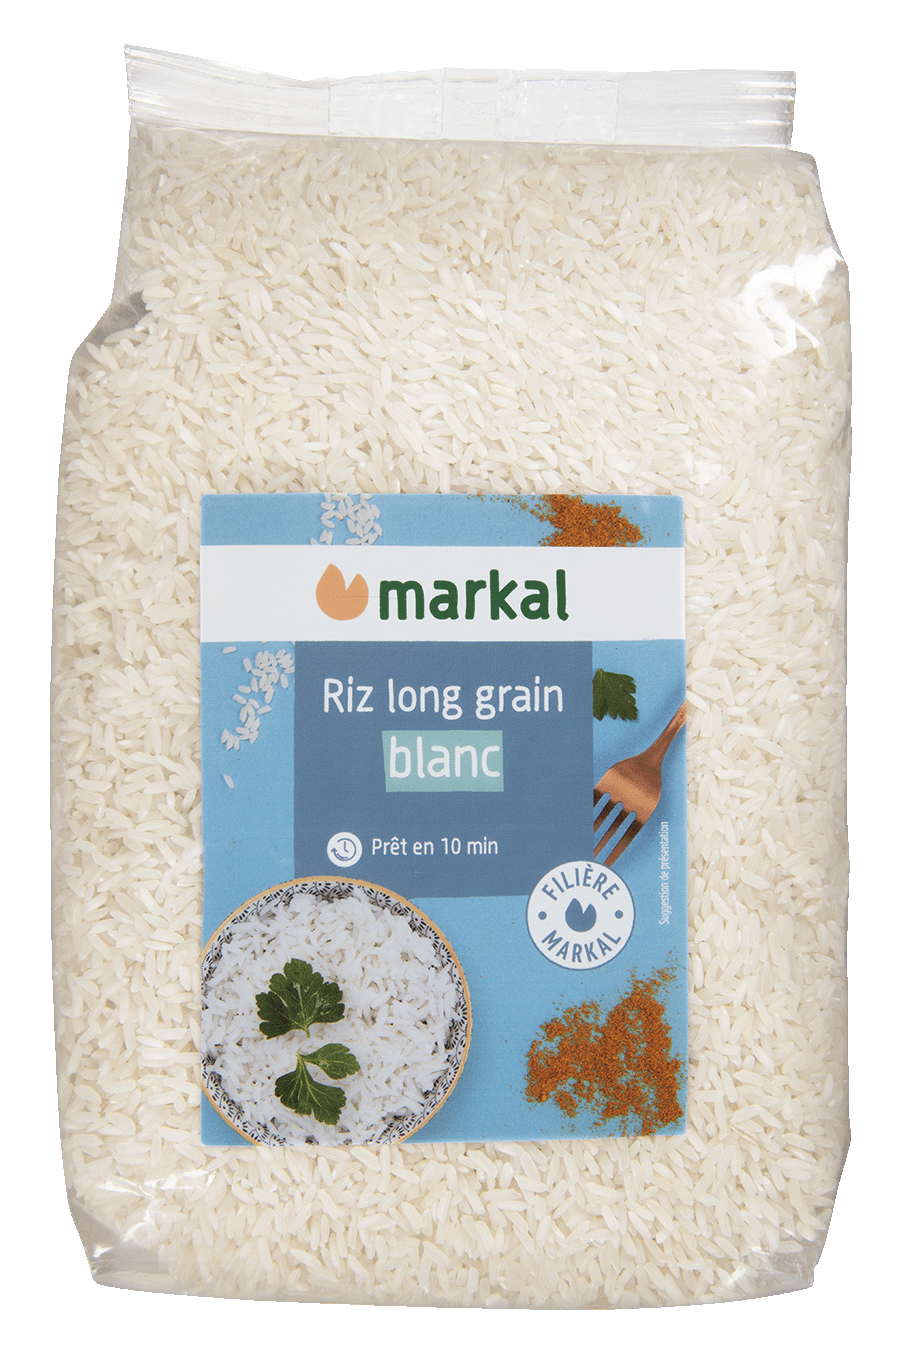 Riz basmati blanc 1 kg Markal